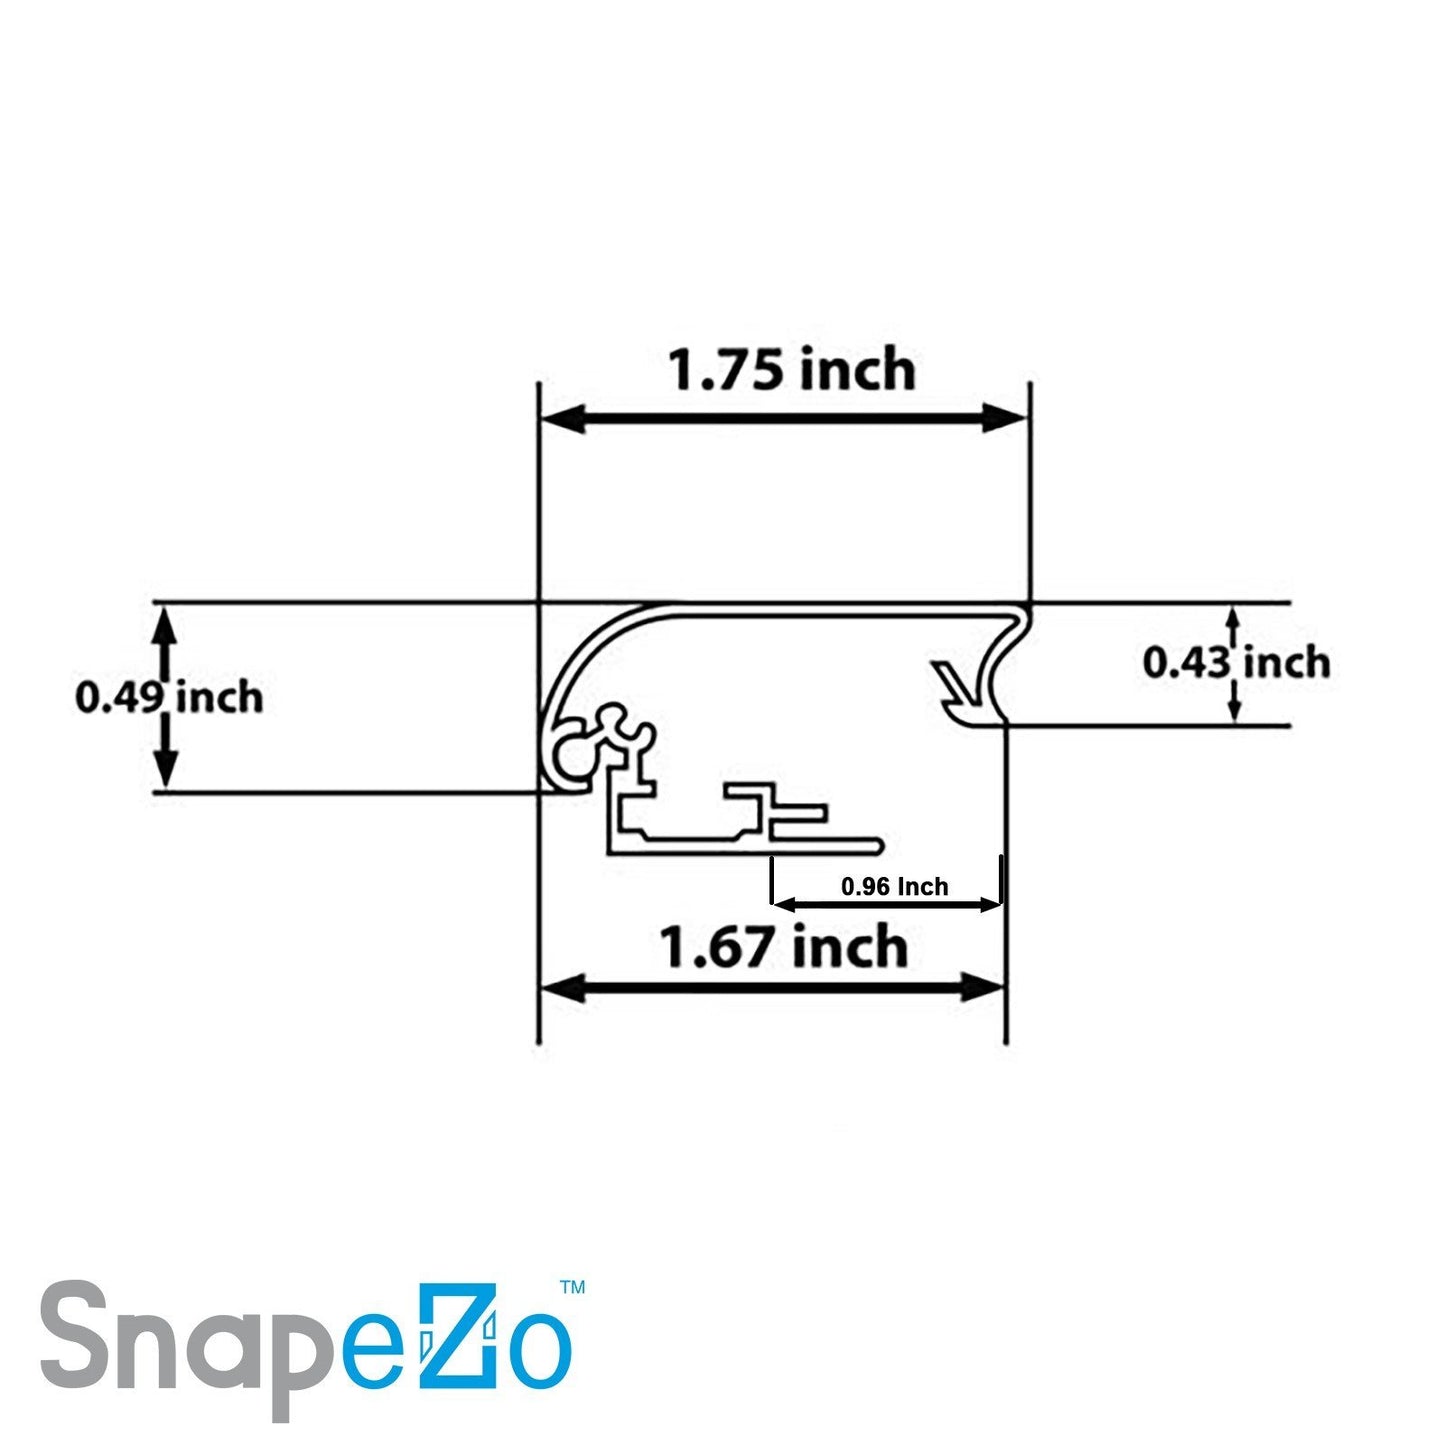 22x28 Silver SnapeZo® Snap Frame - 1.7" Profile